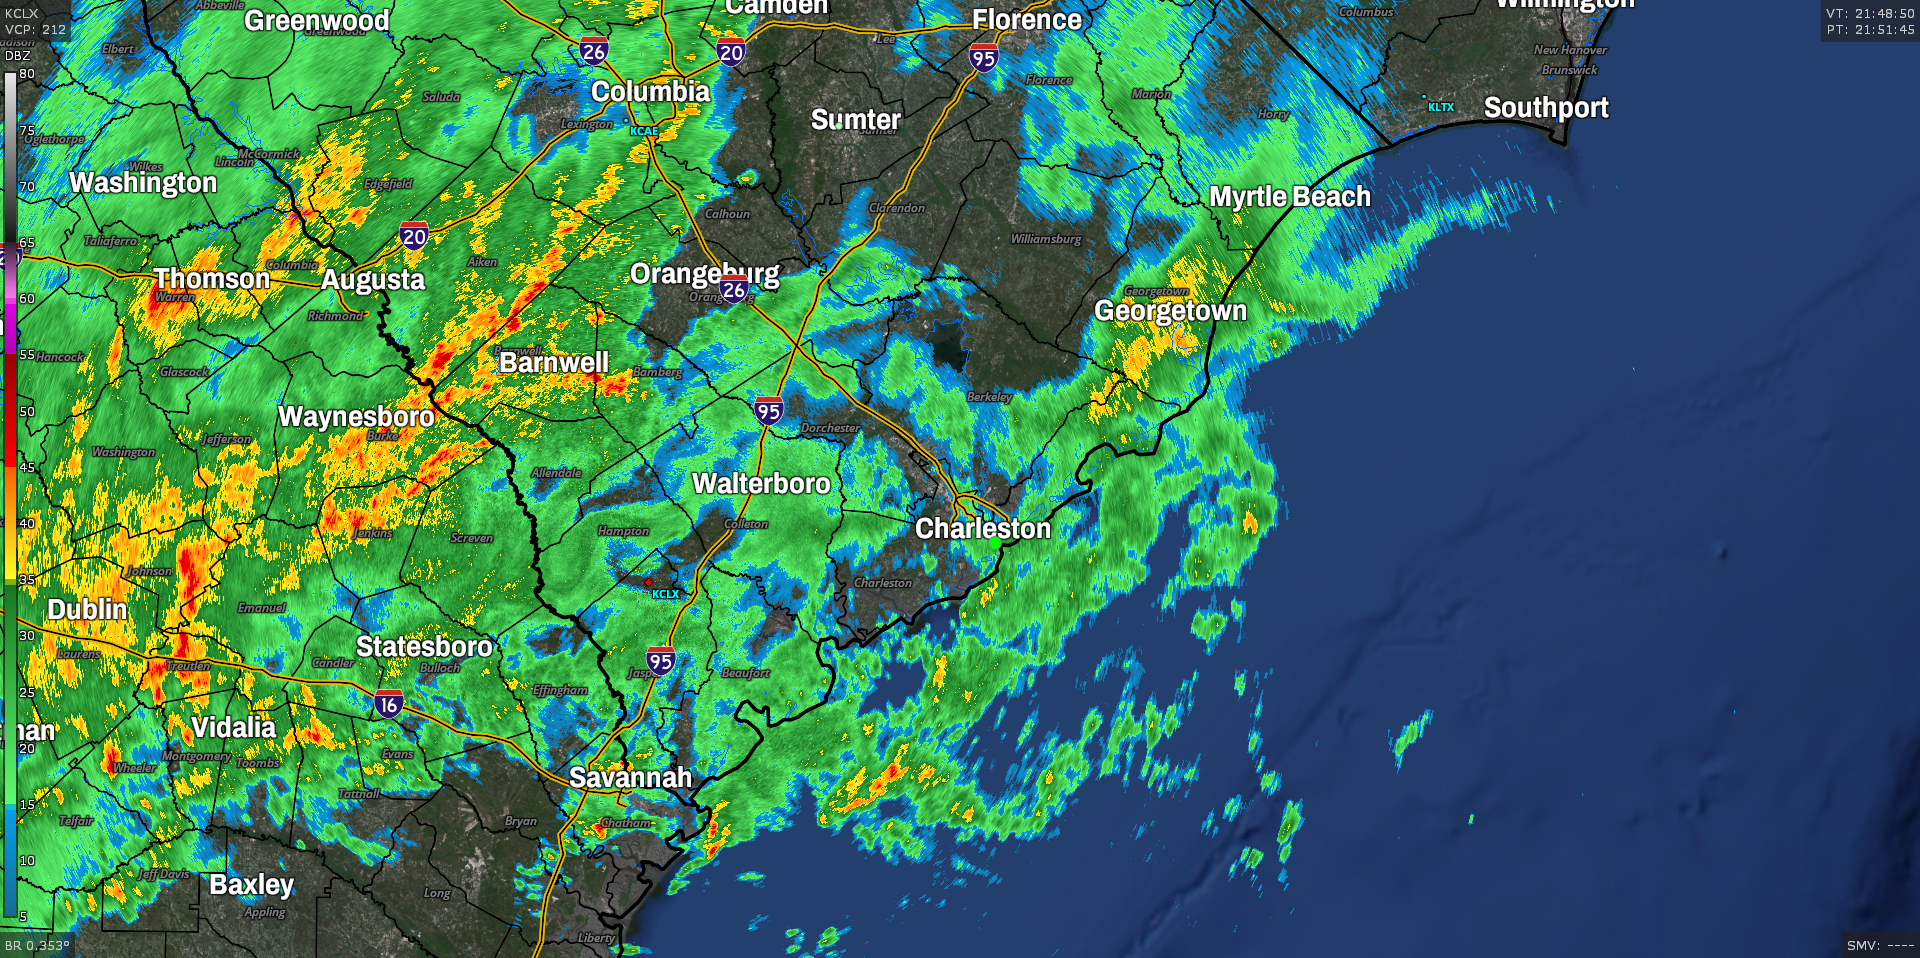 Radar image depicting heavy rain moving into South Carolina.